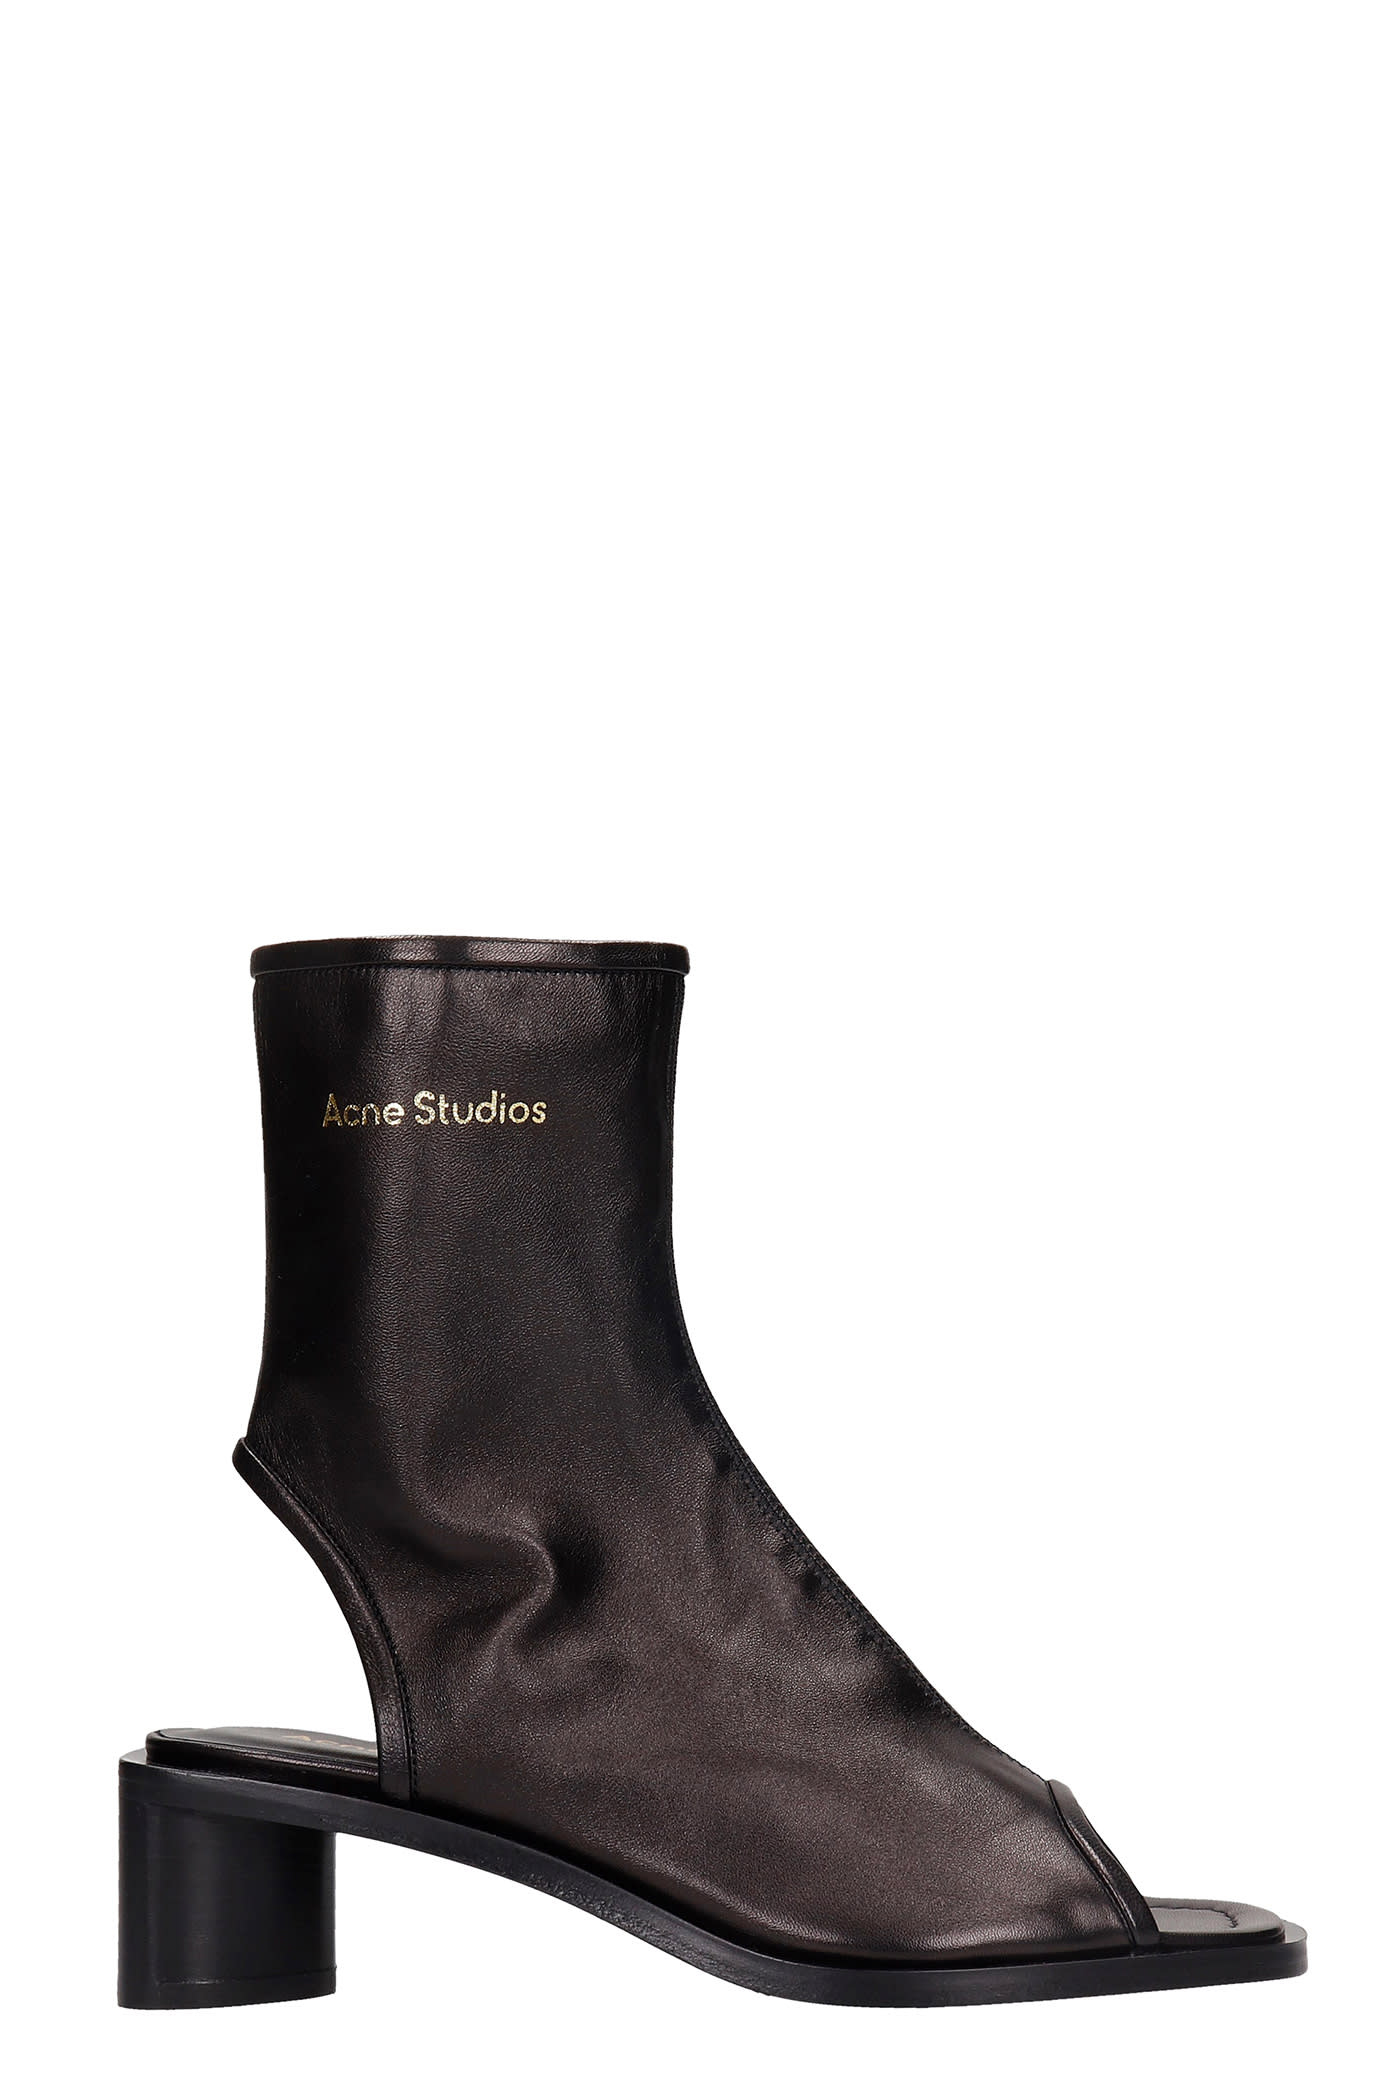 Acne Studios Berla Low Heels Ankle Boots In Black Leather